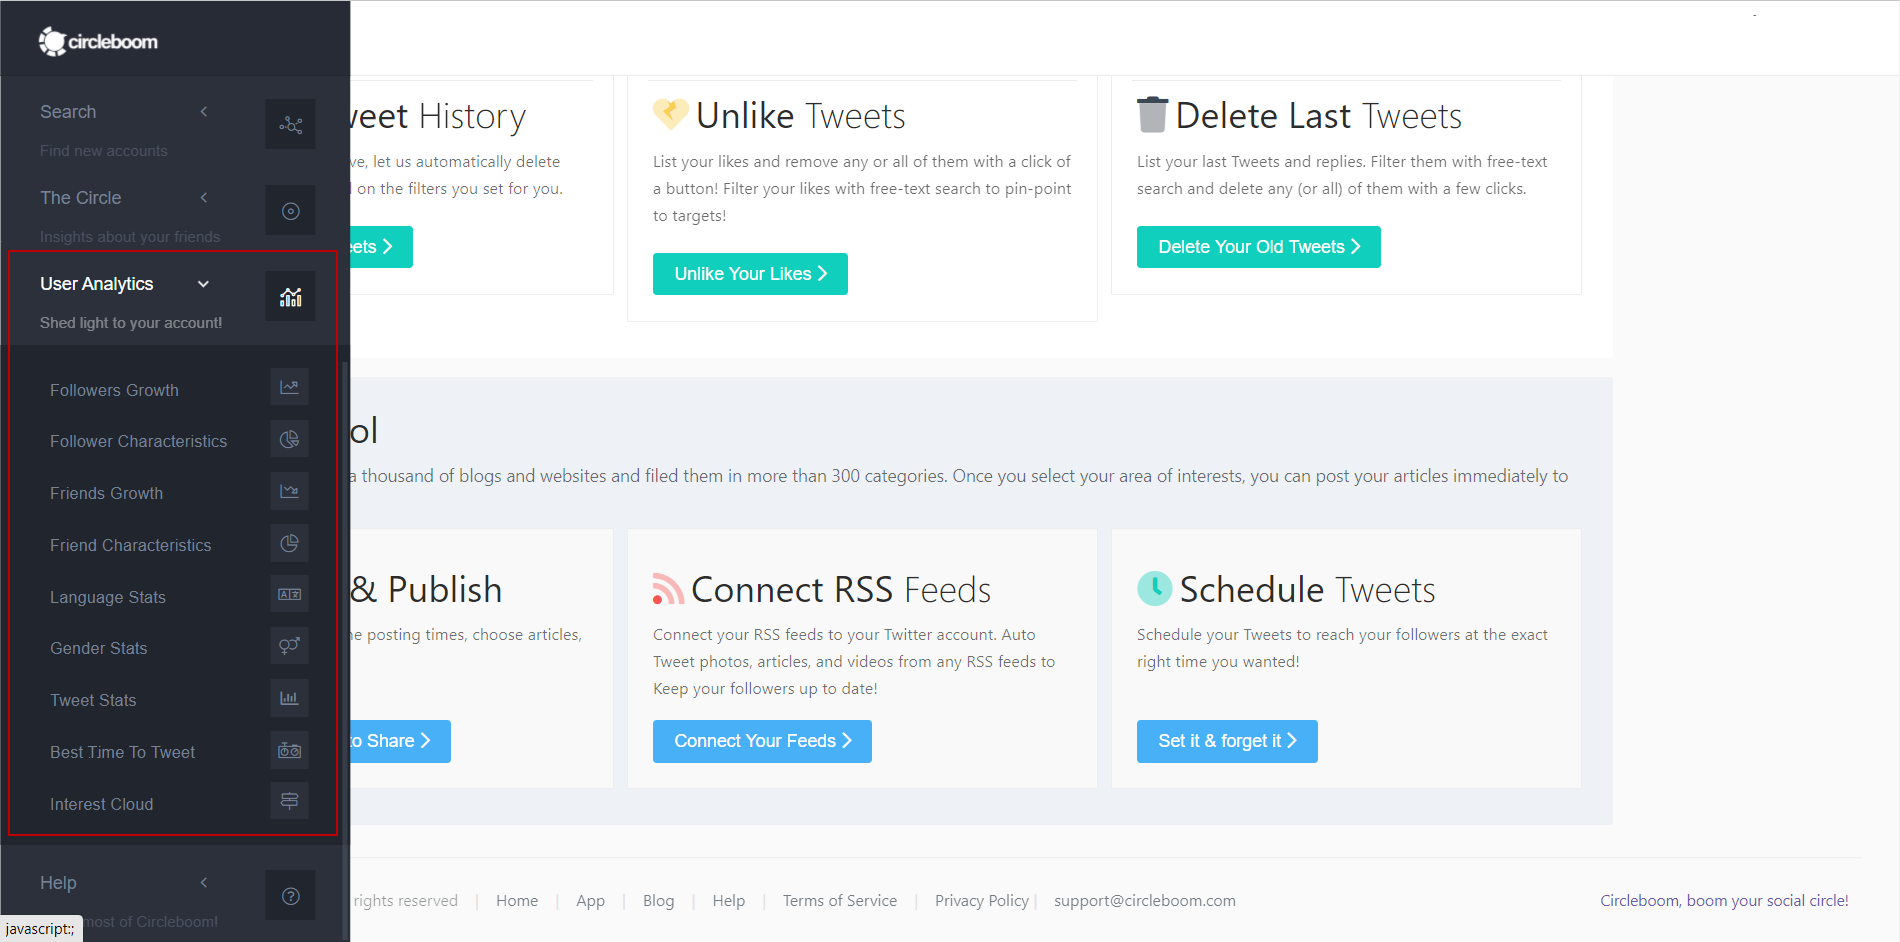 Get Twitter follower analytics via the User Analytics feature of Circleboom Twitter.